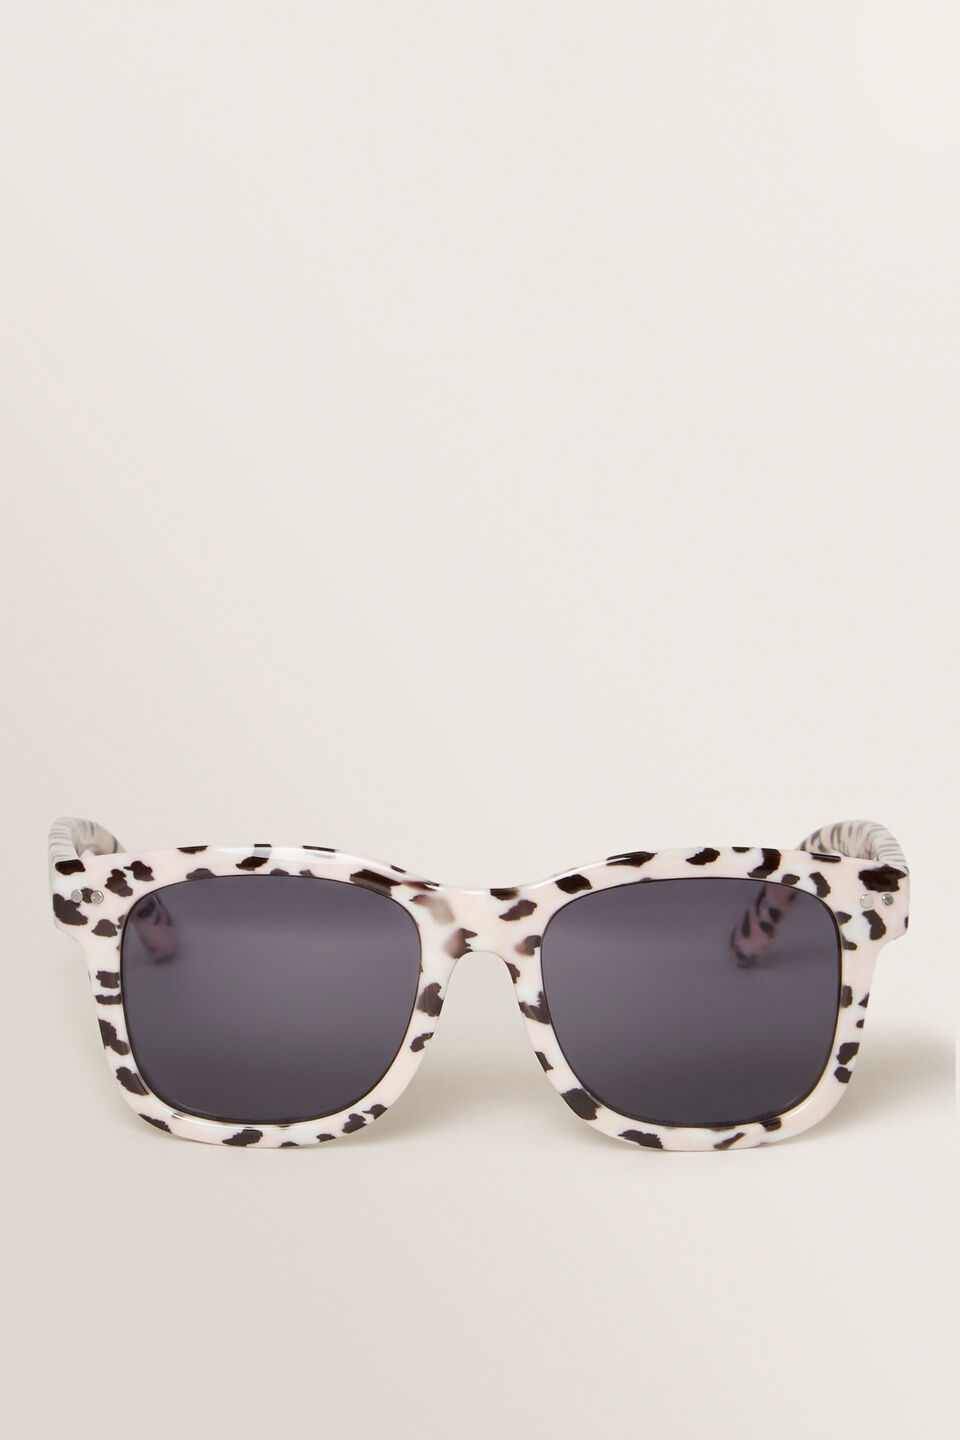 Ocelot Print Sunglasses  